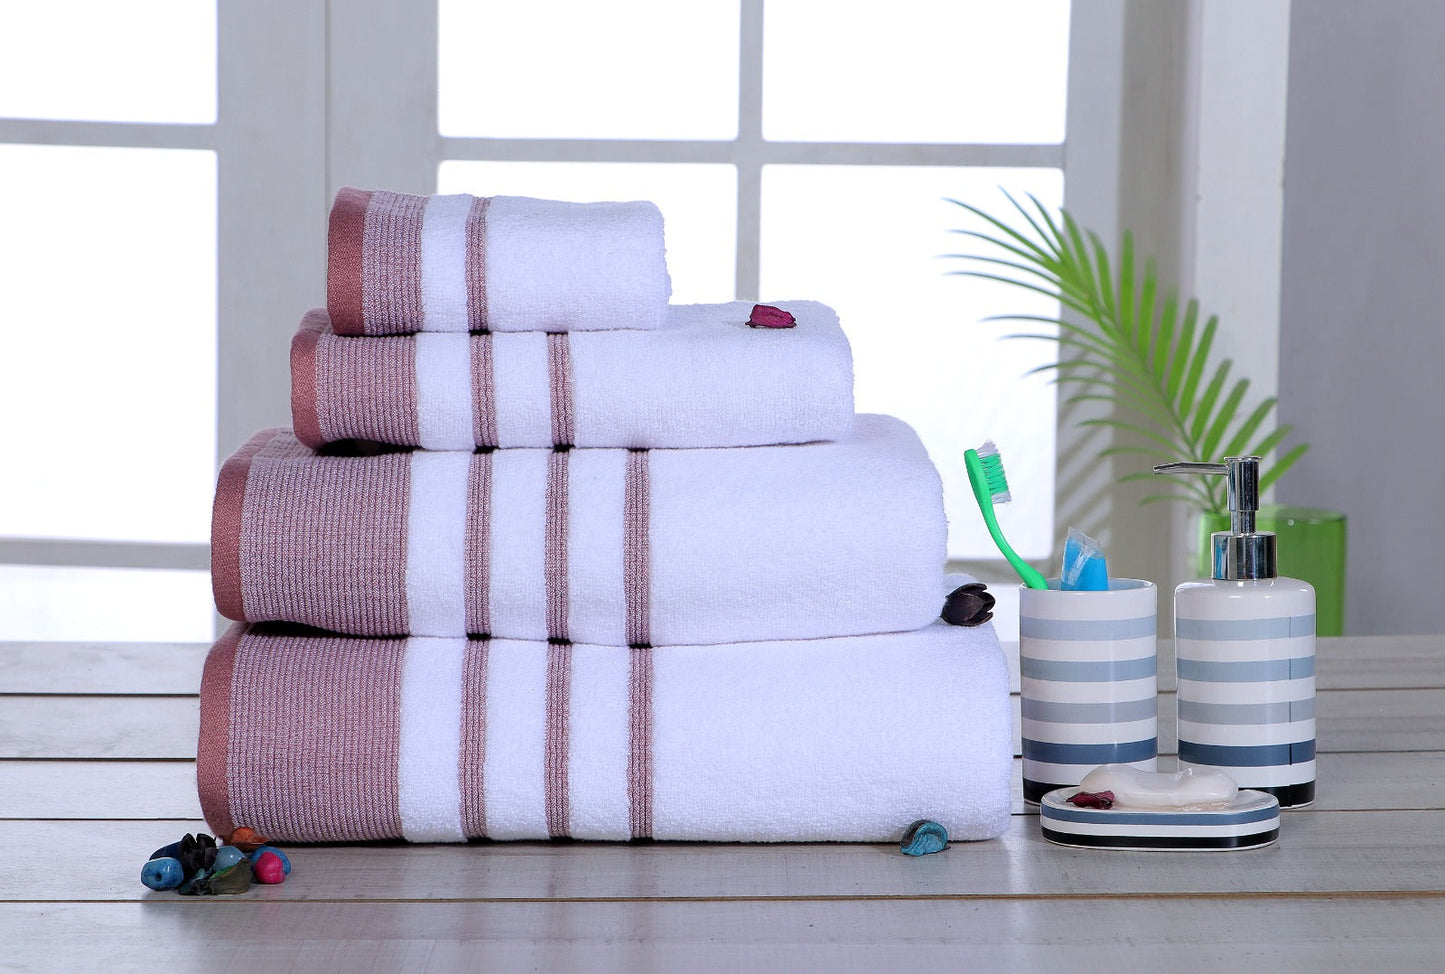 LetsDry 'Reinhert' Towel Combo |Set of 4| 1 Bath Sheet, 1 Bath, 1 Hand, 1 Wash